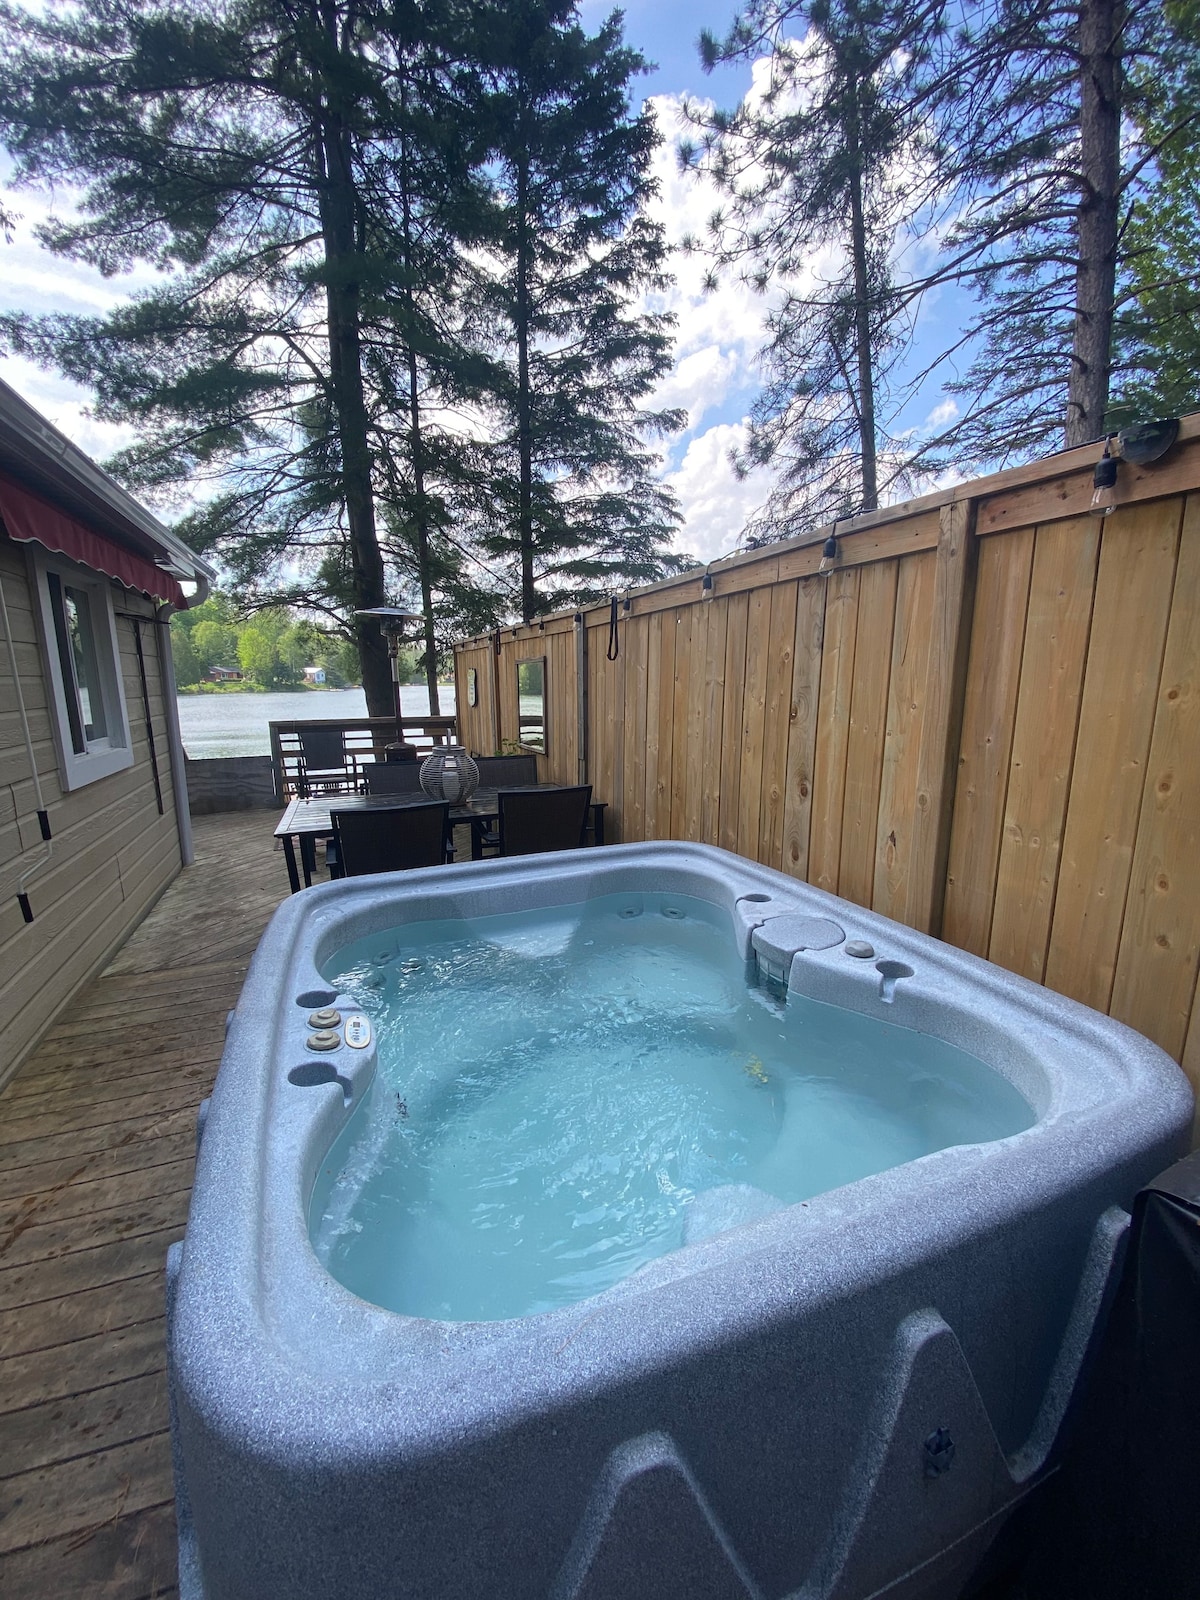 Lakeside Cabin getaway retreat with hot tub